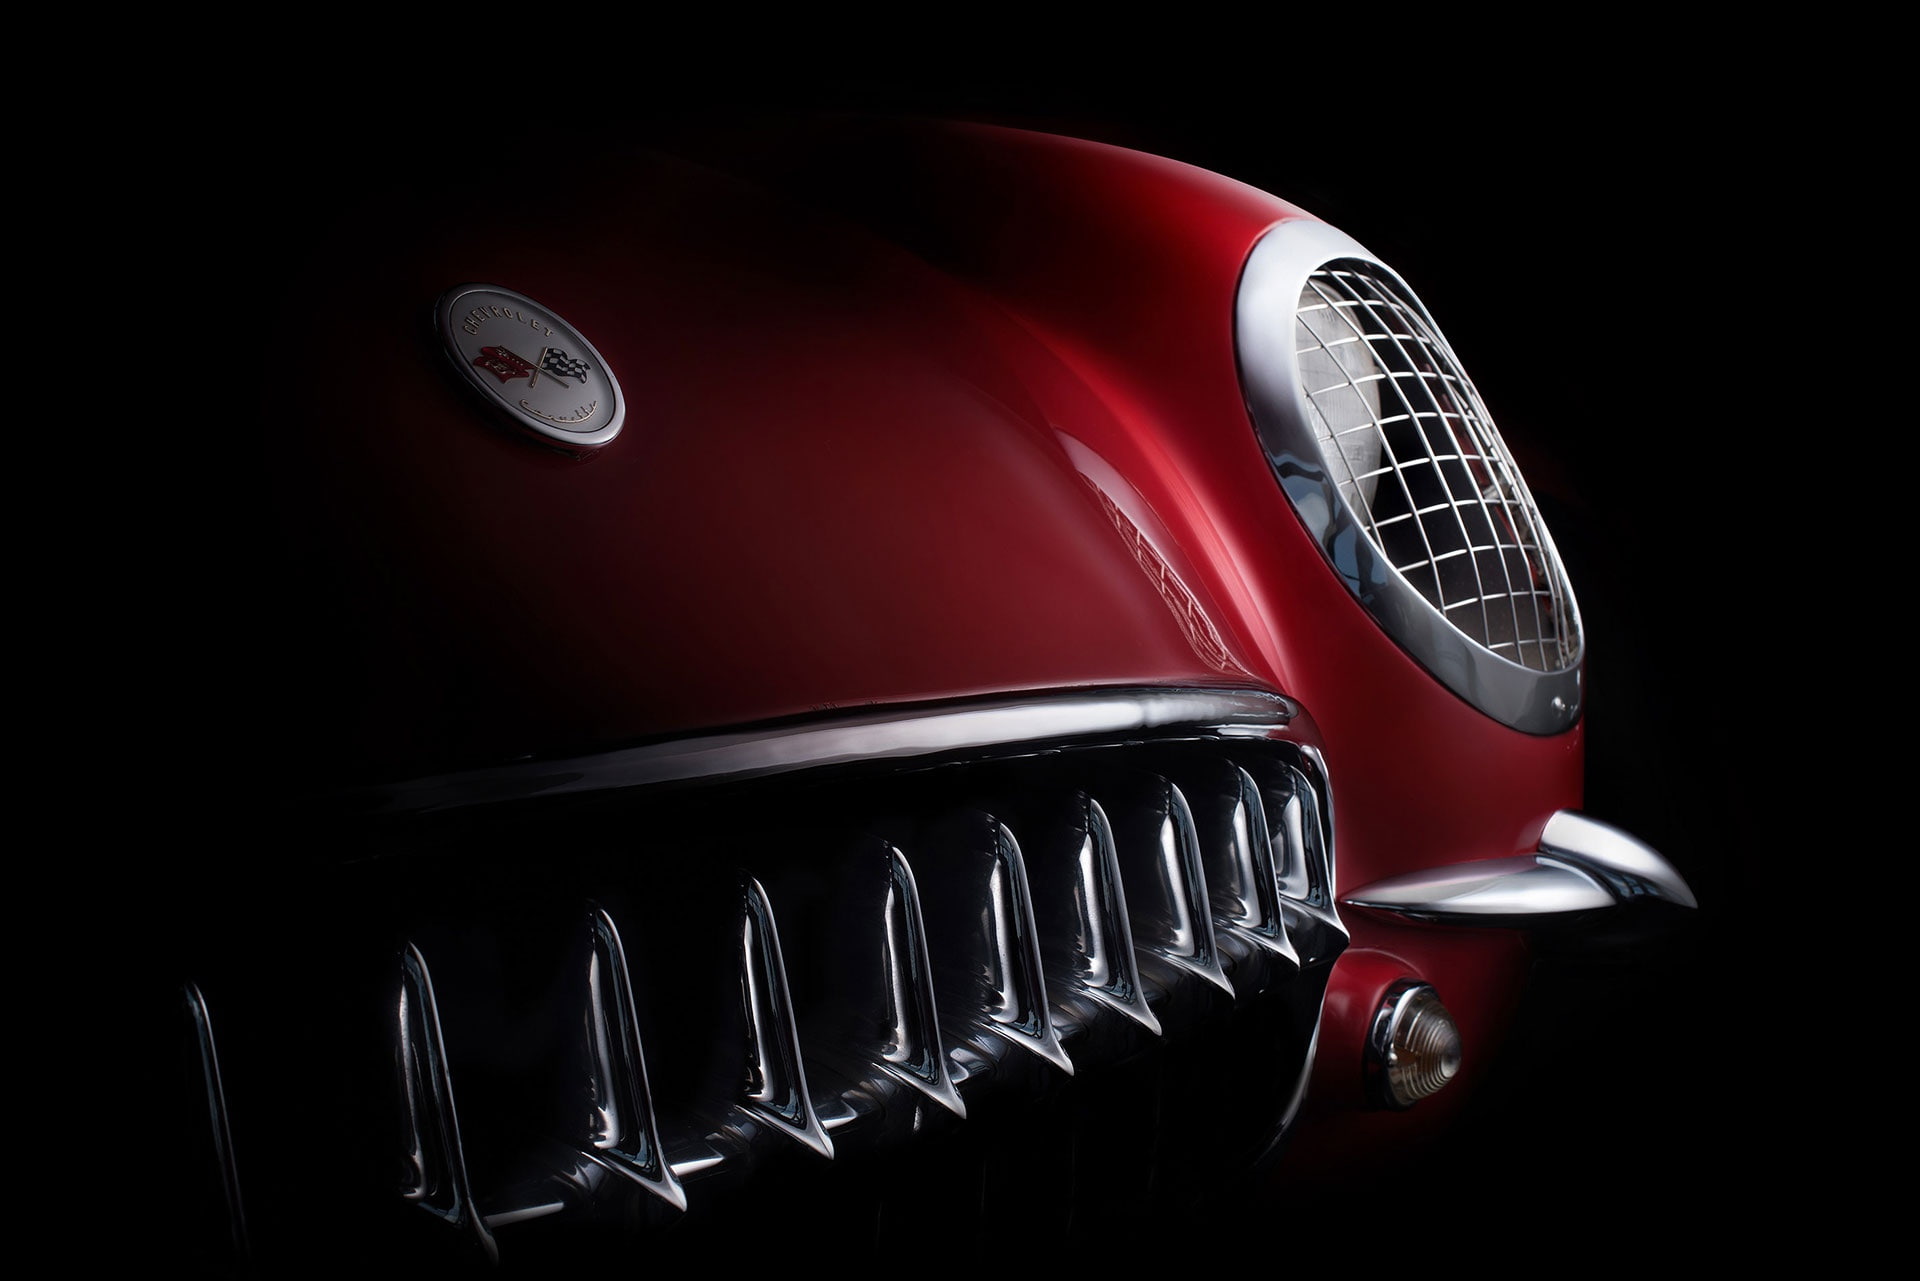 dark, red, car, vehicle, 1954 (Year), Corvette, red cars, motor vehicle